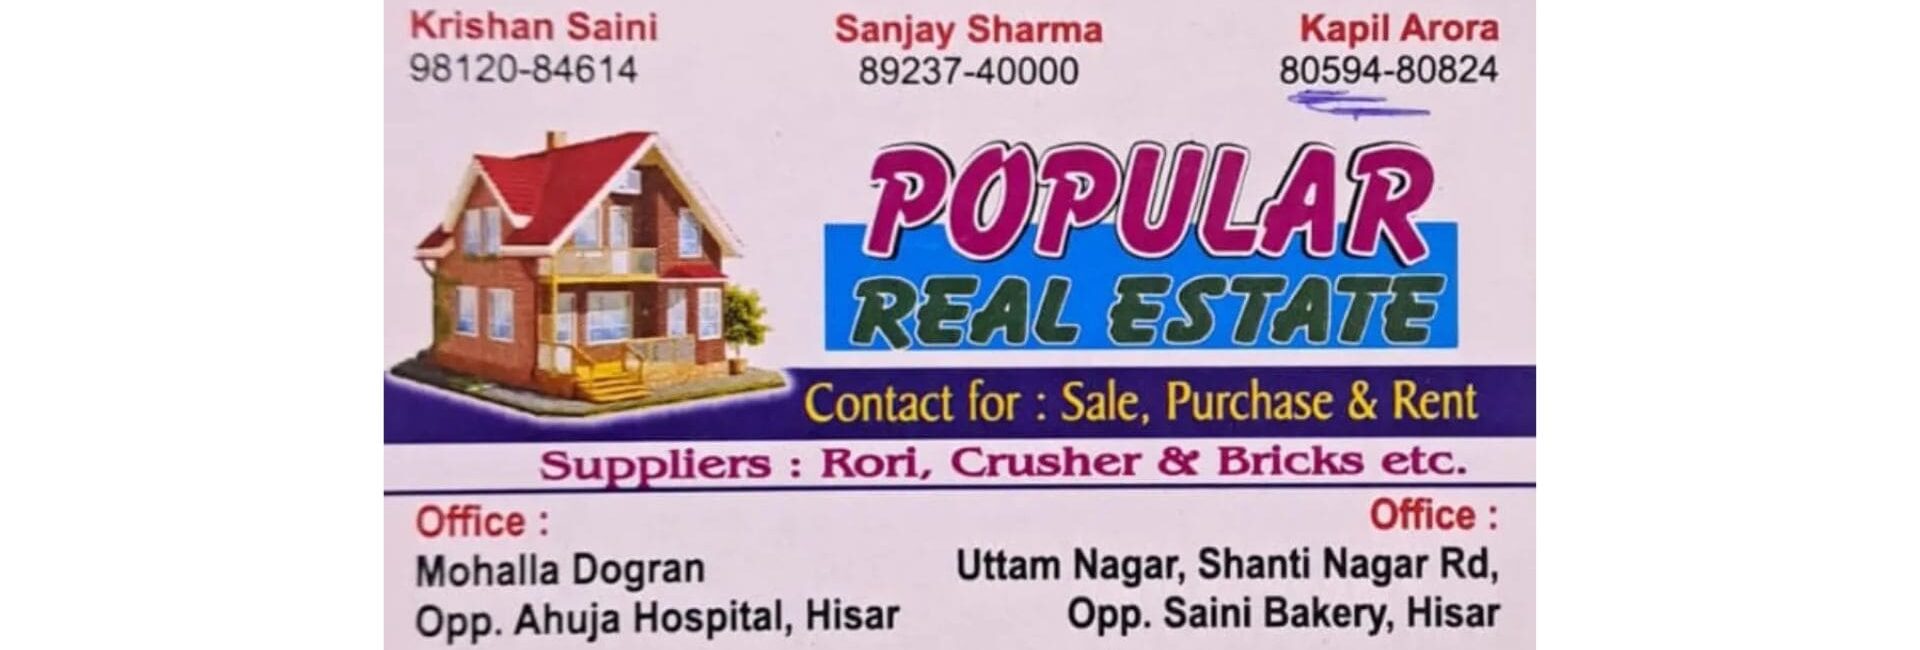 Popular Real Estate - Real estate agent in Hisar